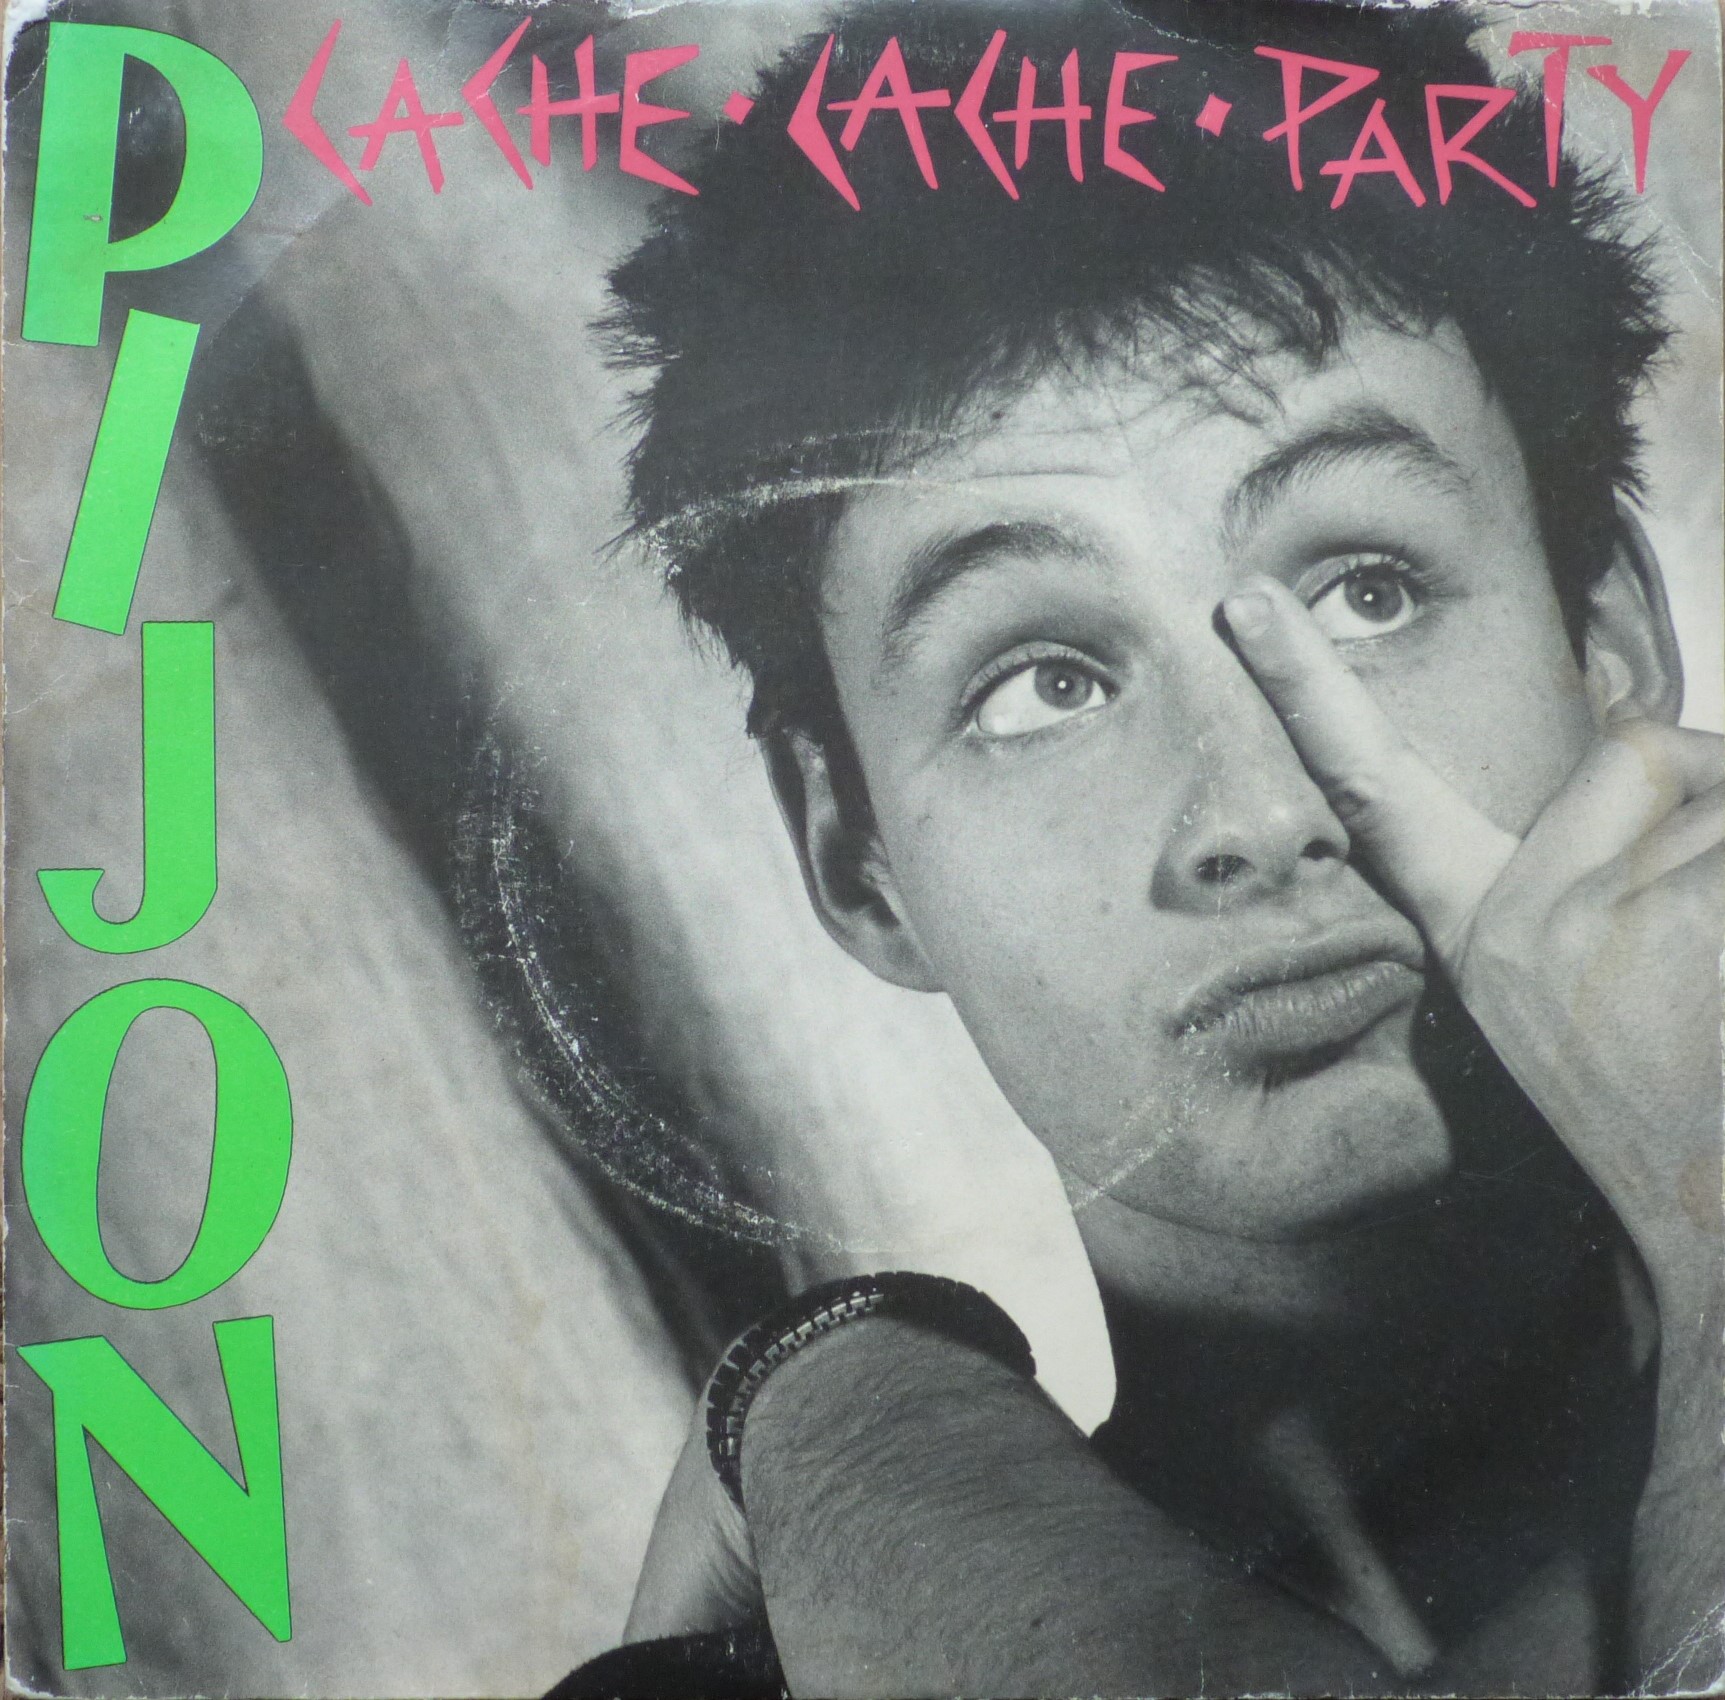 Pijon, Cache cache party